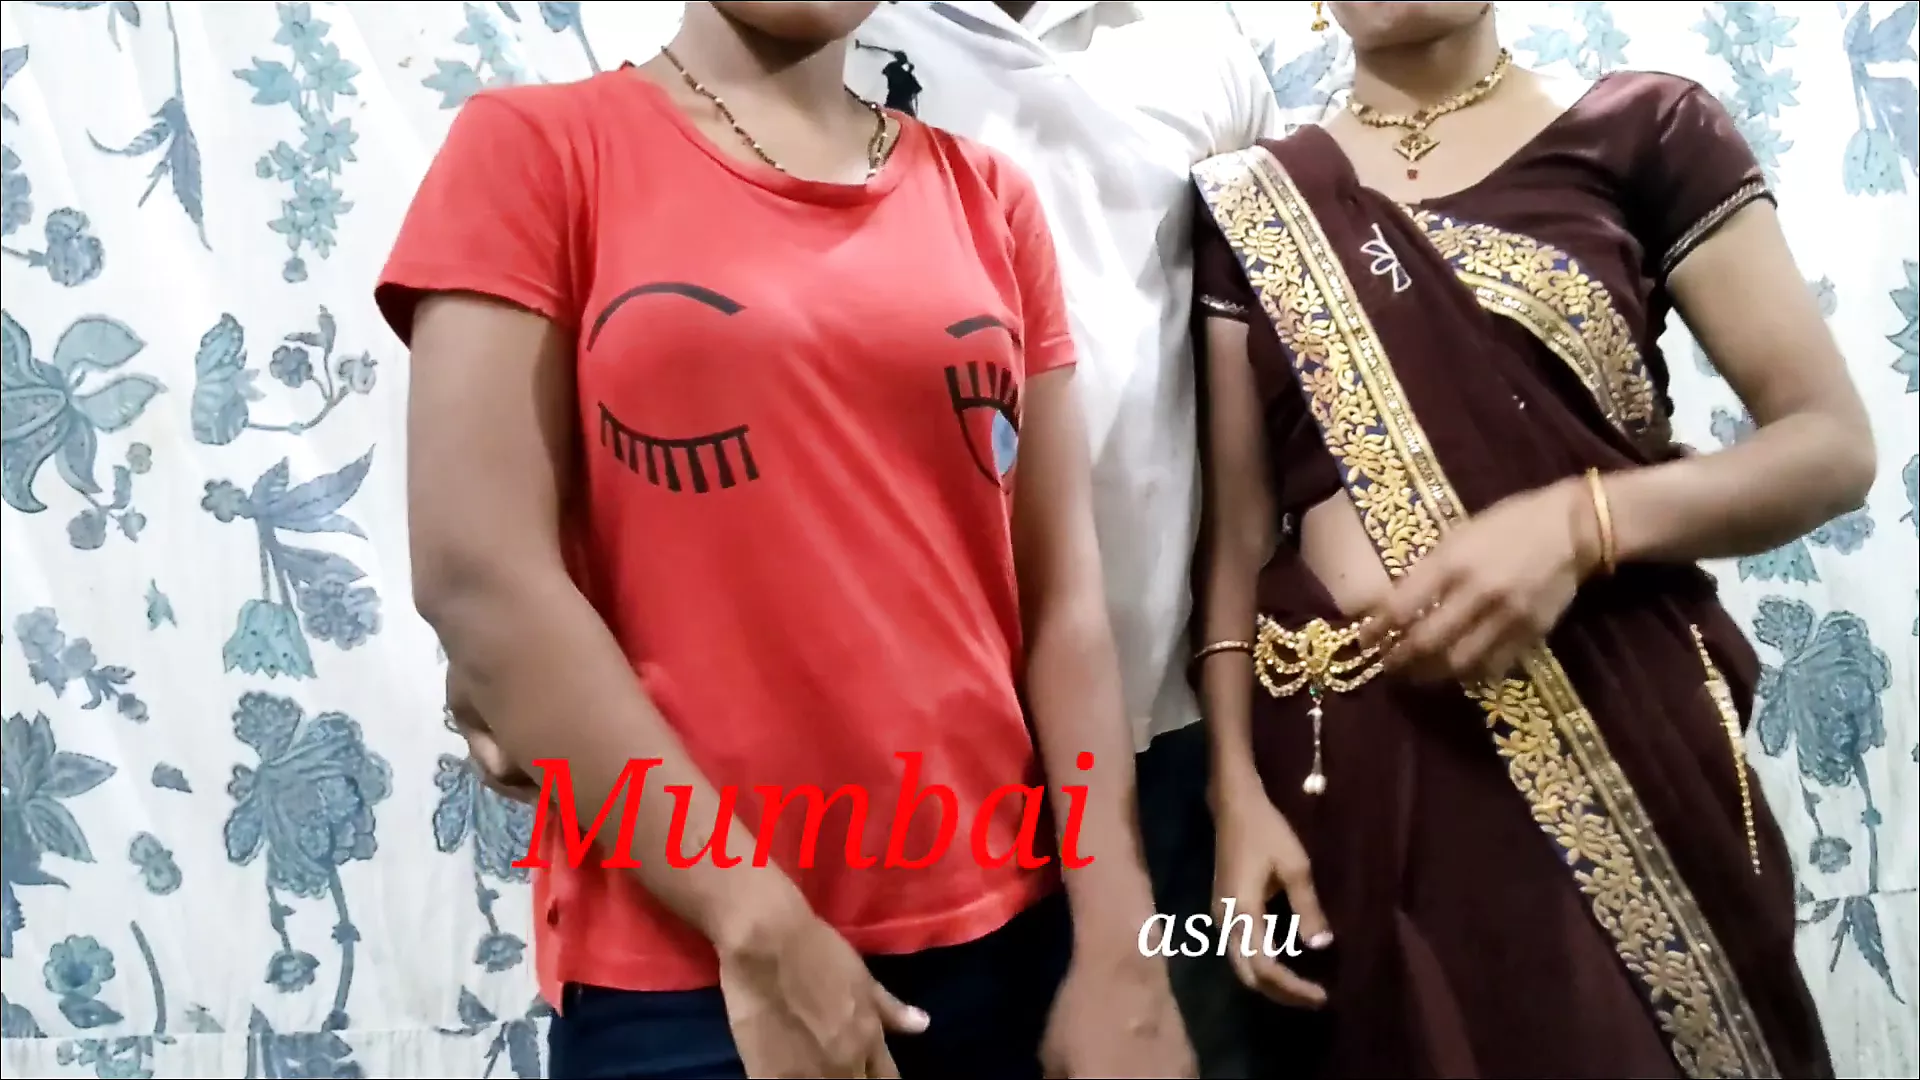 Indian threesome video, Mumbai Ashu sex video, anal pic